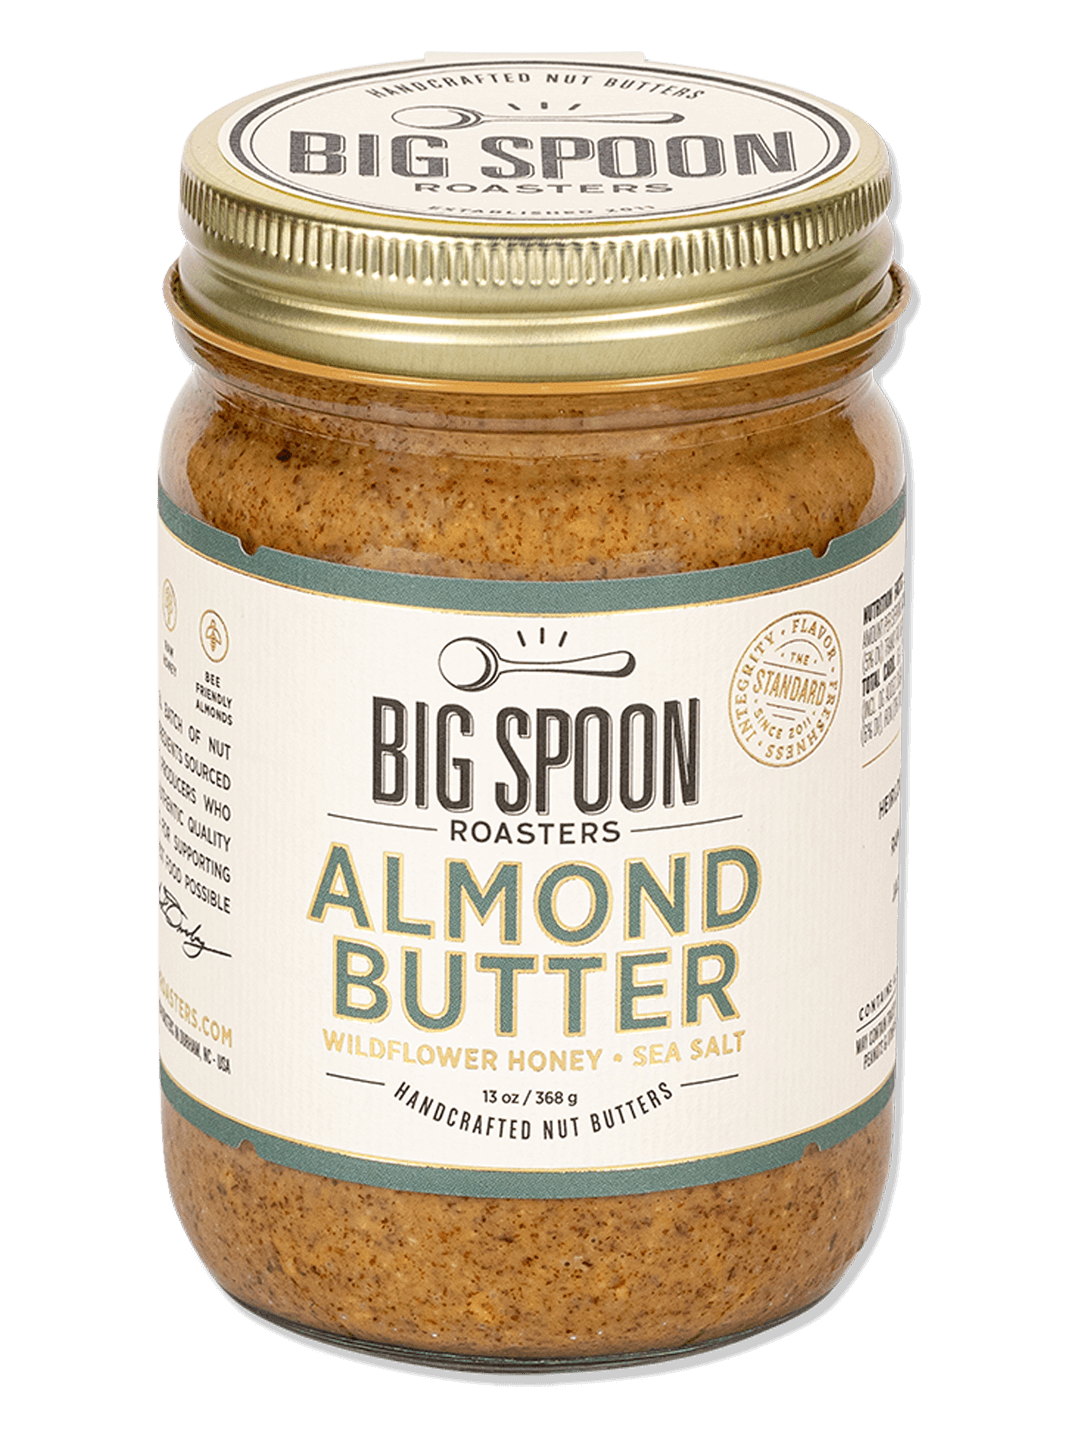 13oz jar of Big Spoon Roasters Almond Butter